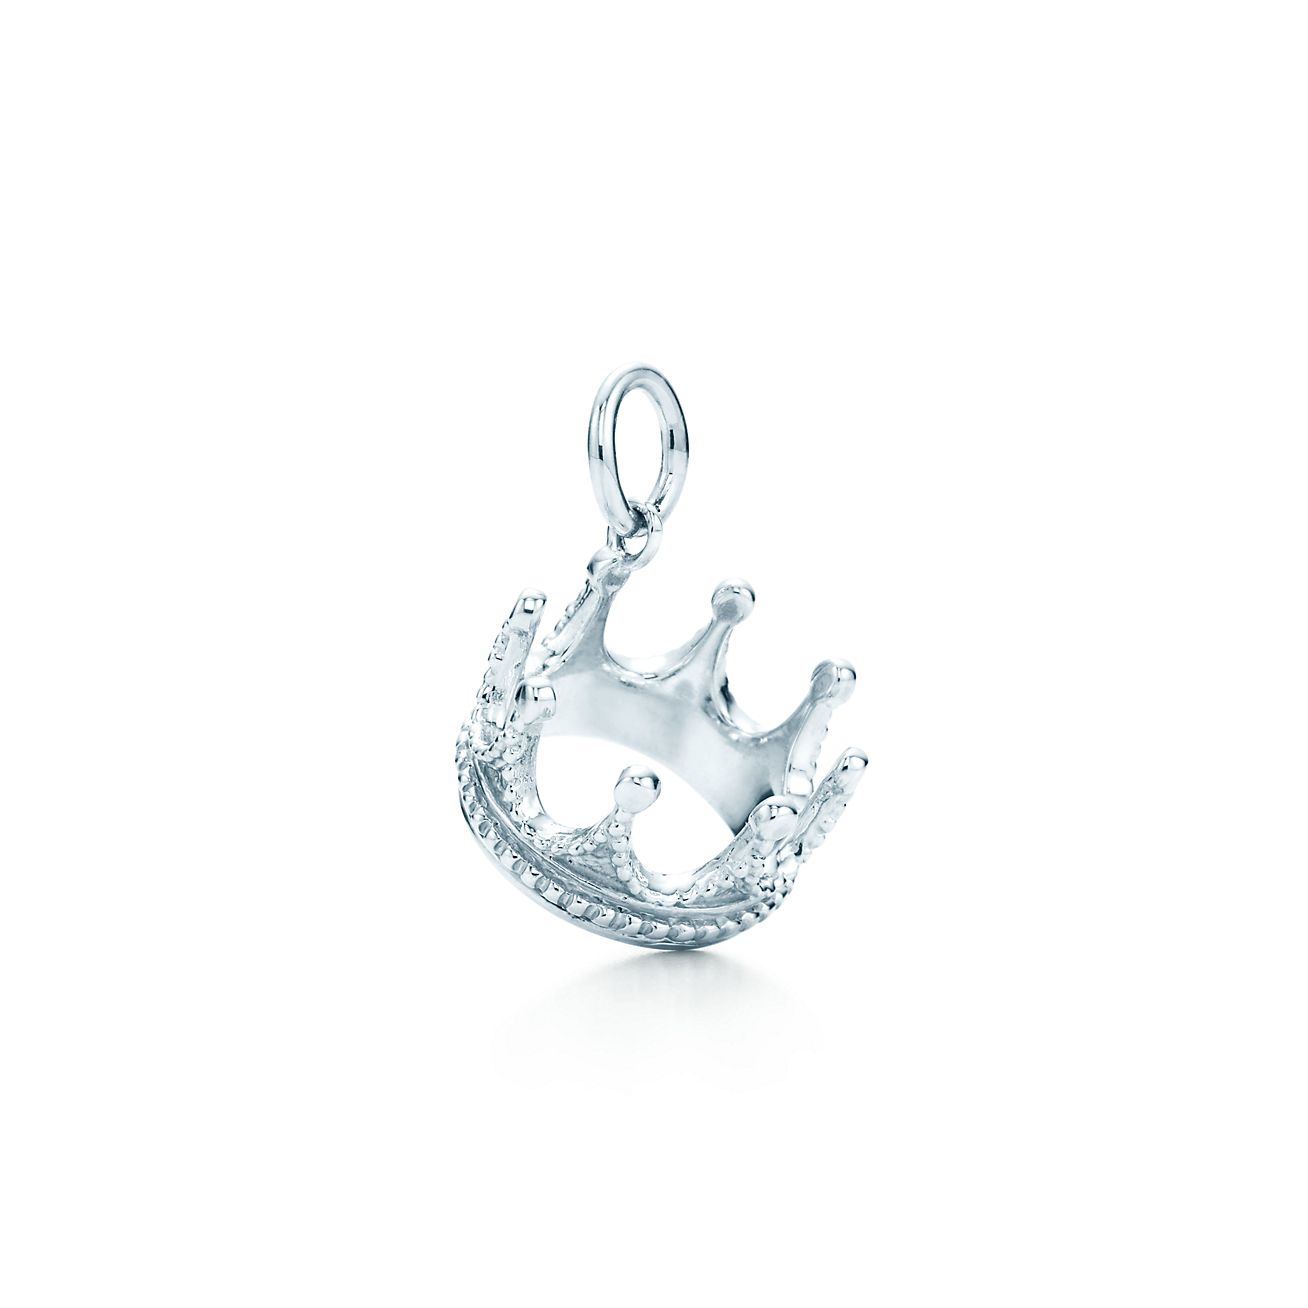 tiffany crown ring